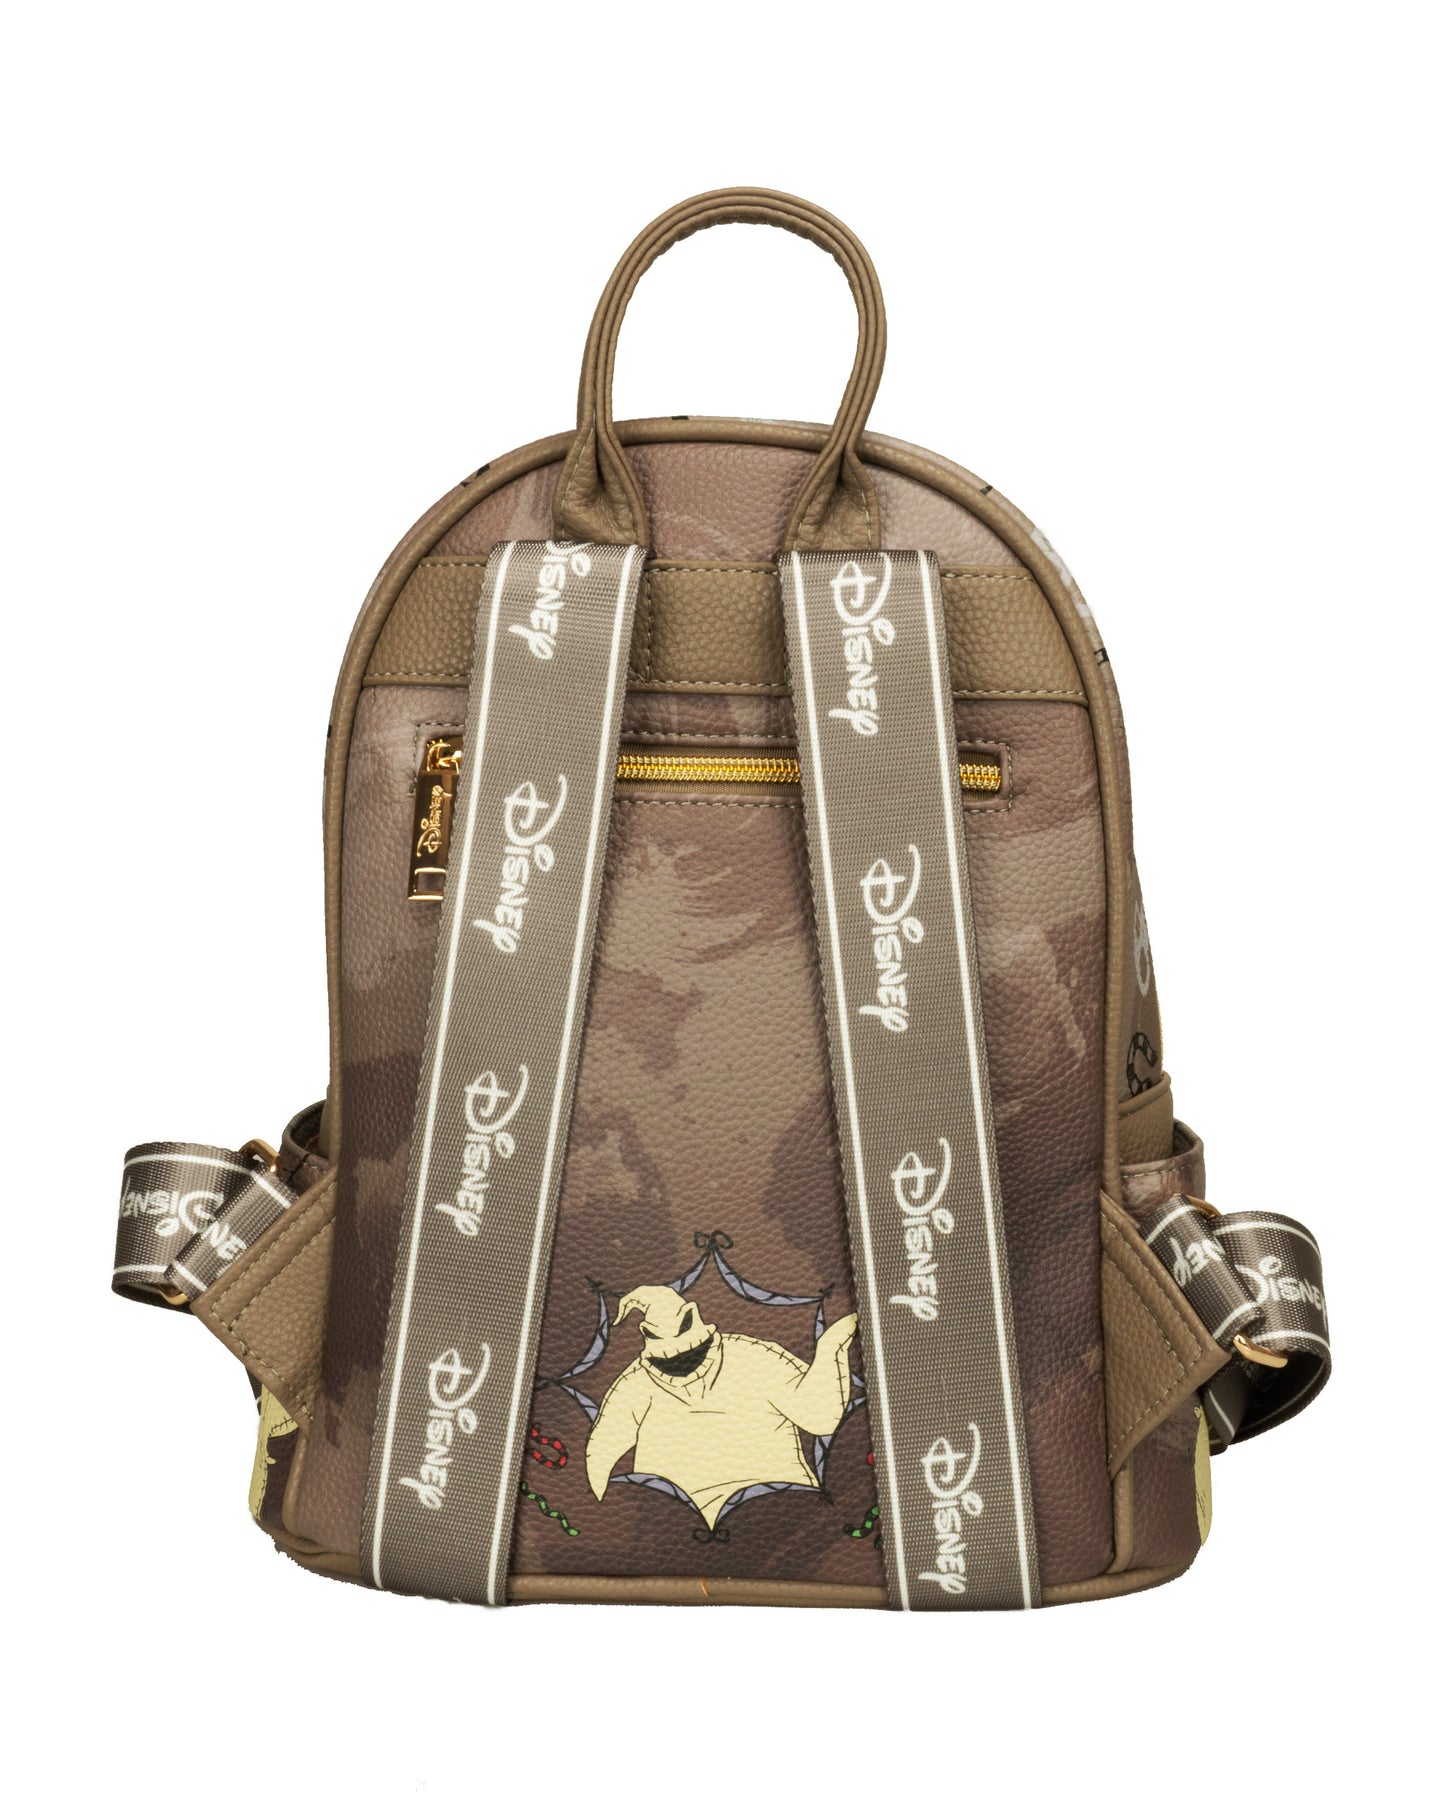 Disney Sleeping Beauty 11-inch Vegan Leather Mini Backpack – WondaPop